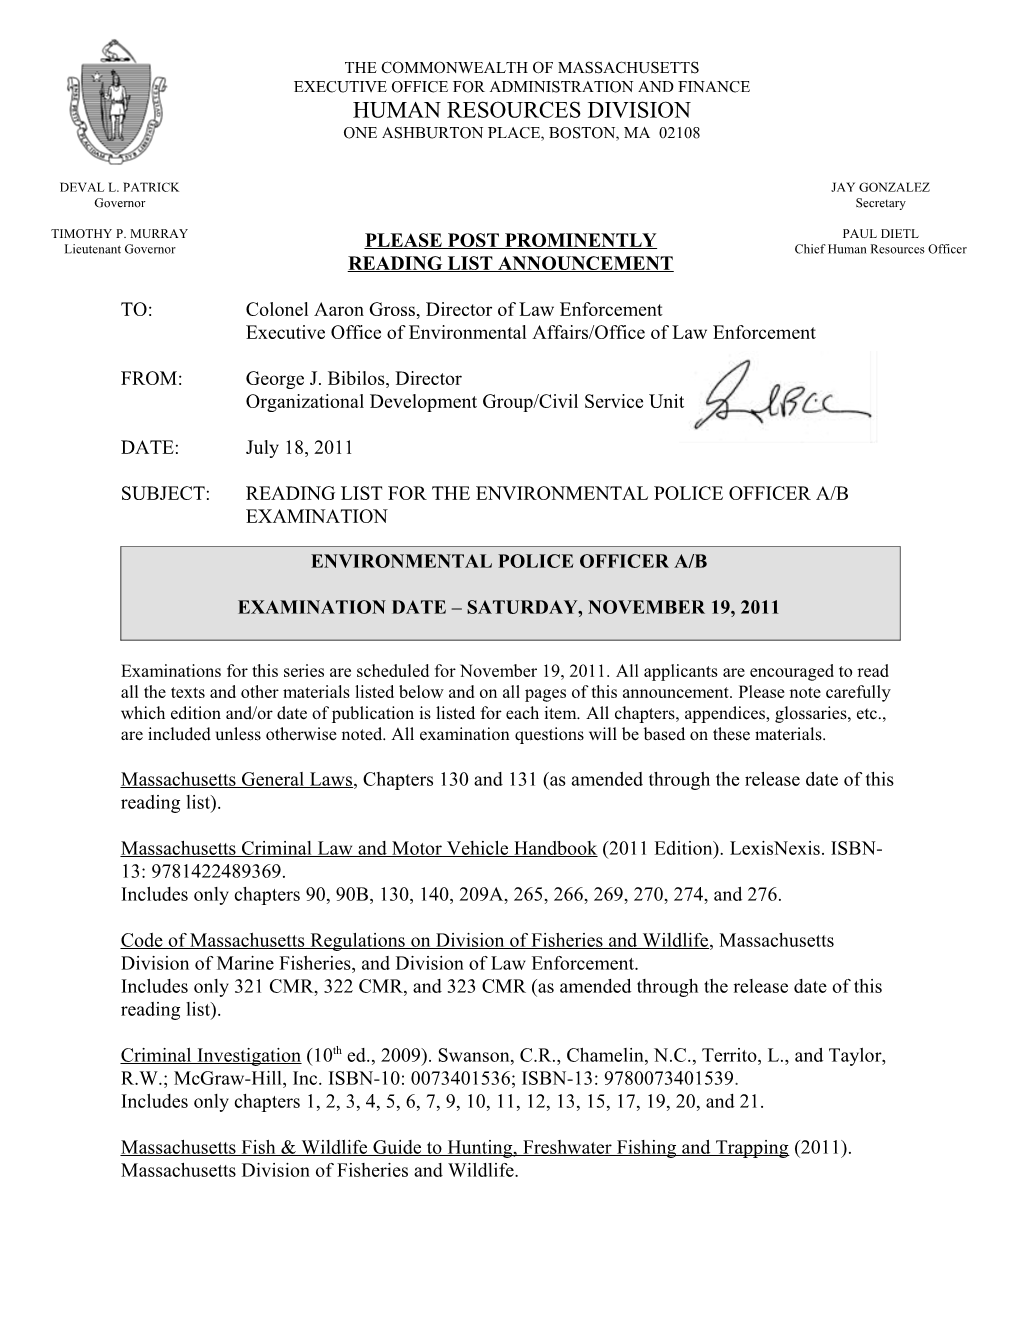 Environmental Police Officer A/B Reading List for November 19, 2011 Examination